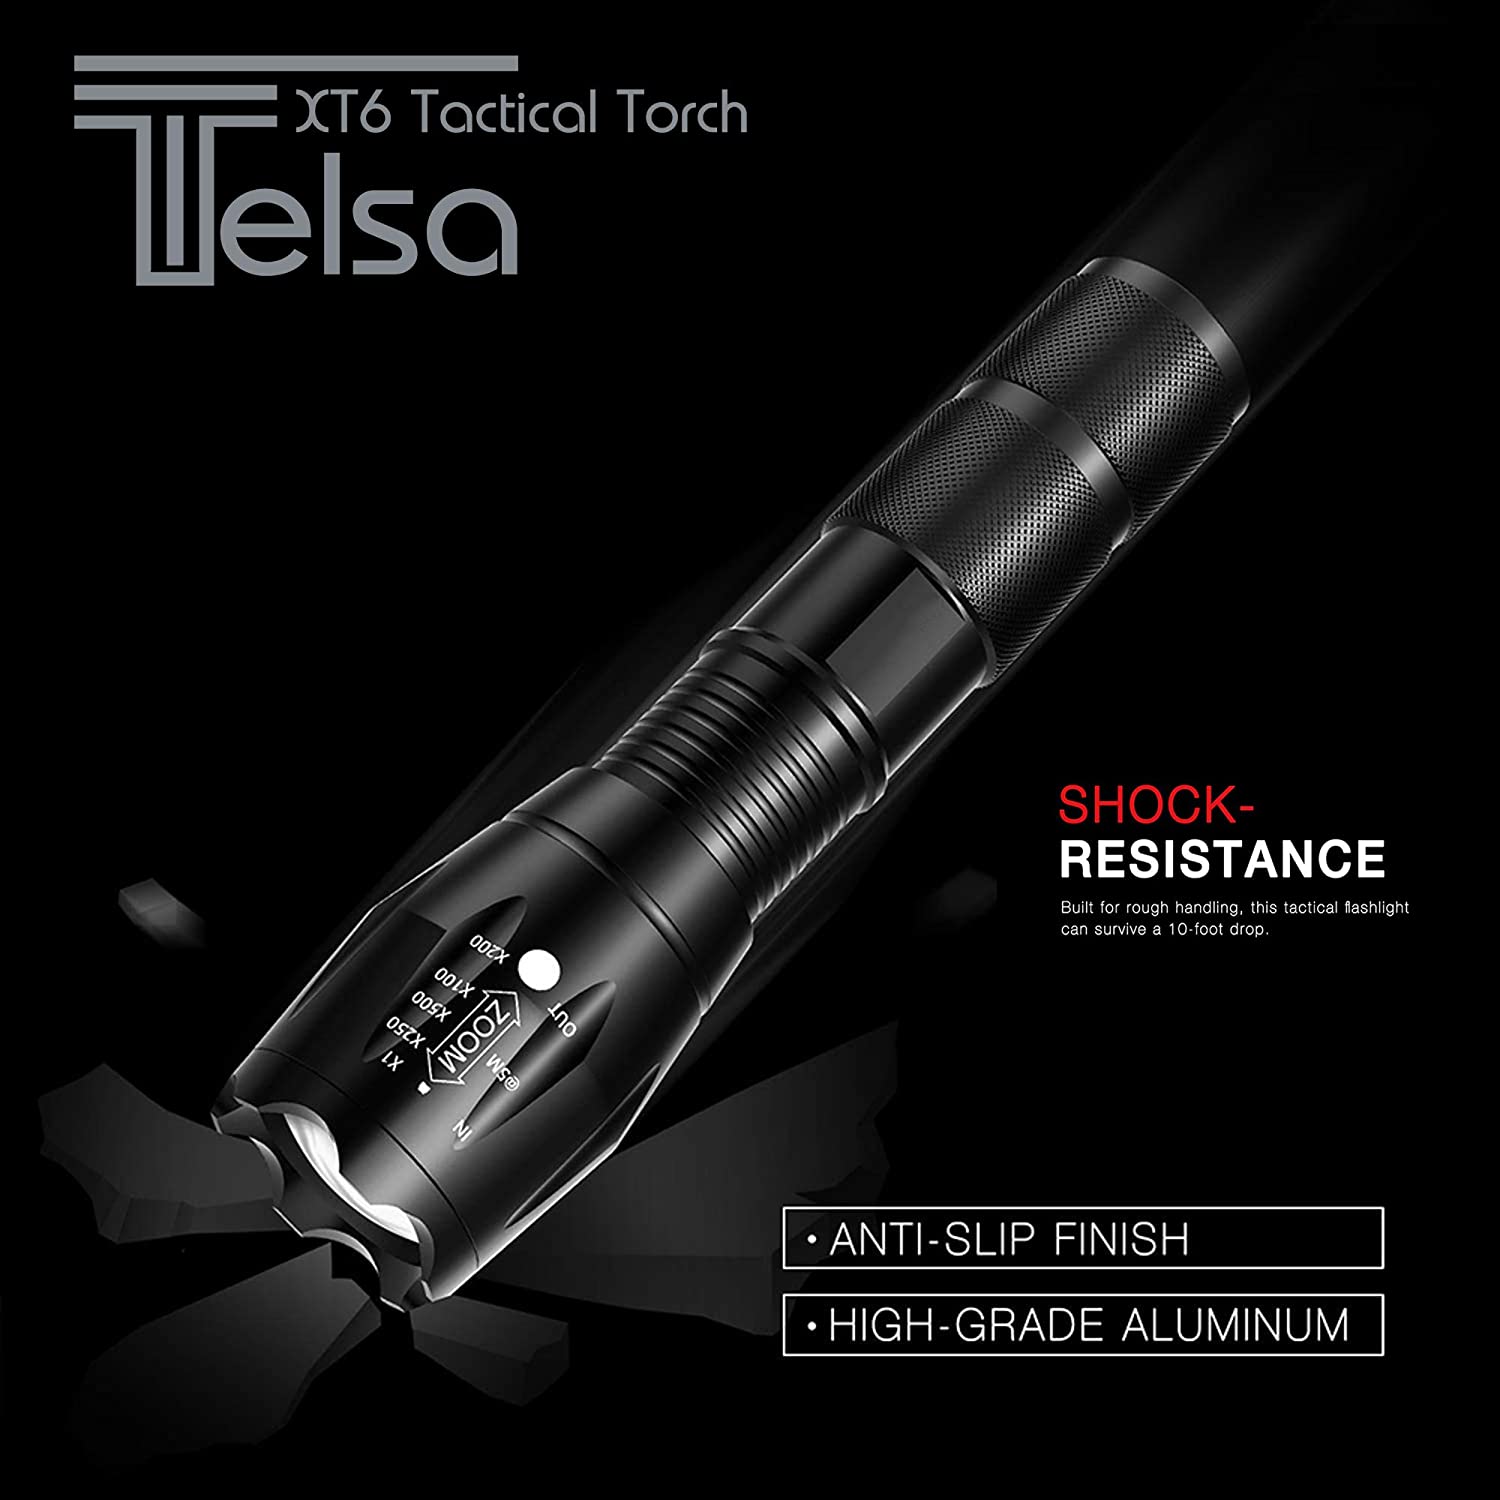 Telsa Telsa - Waterproof Zoom Aluminium LED Tactical Torch Flashlight - Free 4 x 18650 Batteries & USB Charger Torch